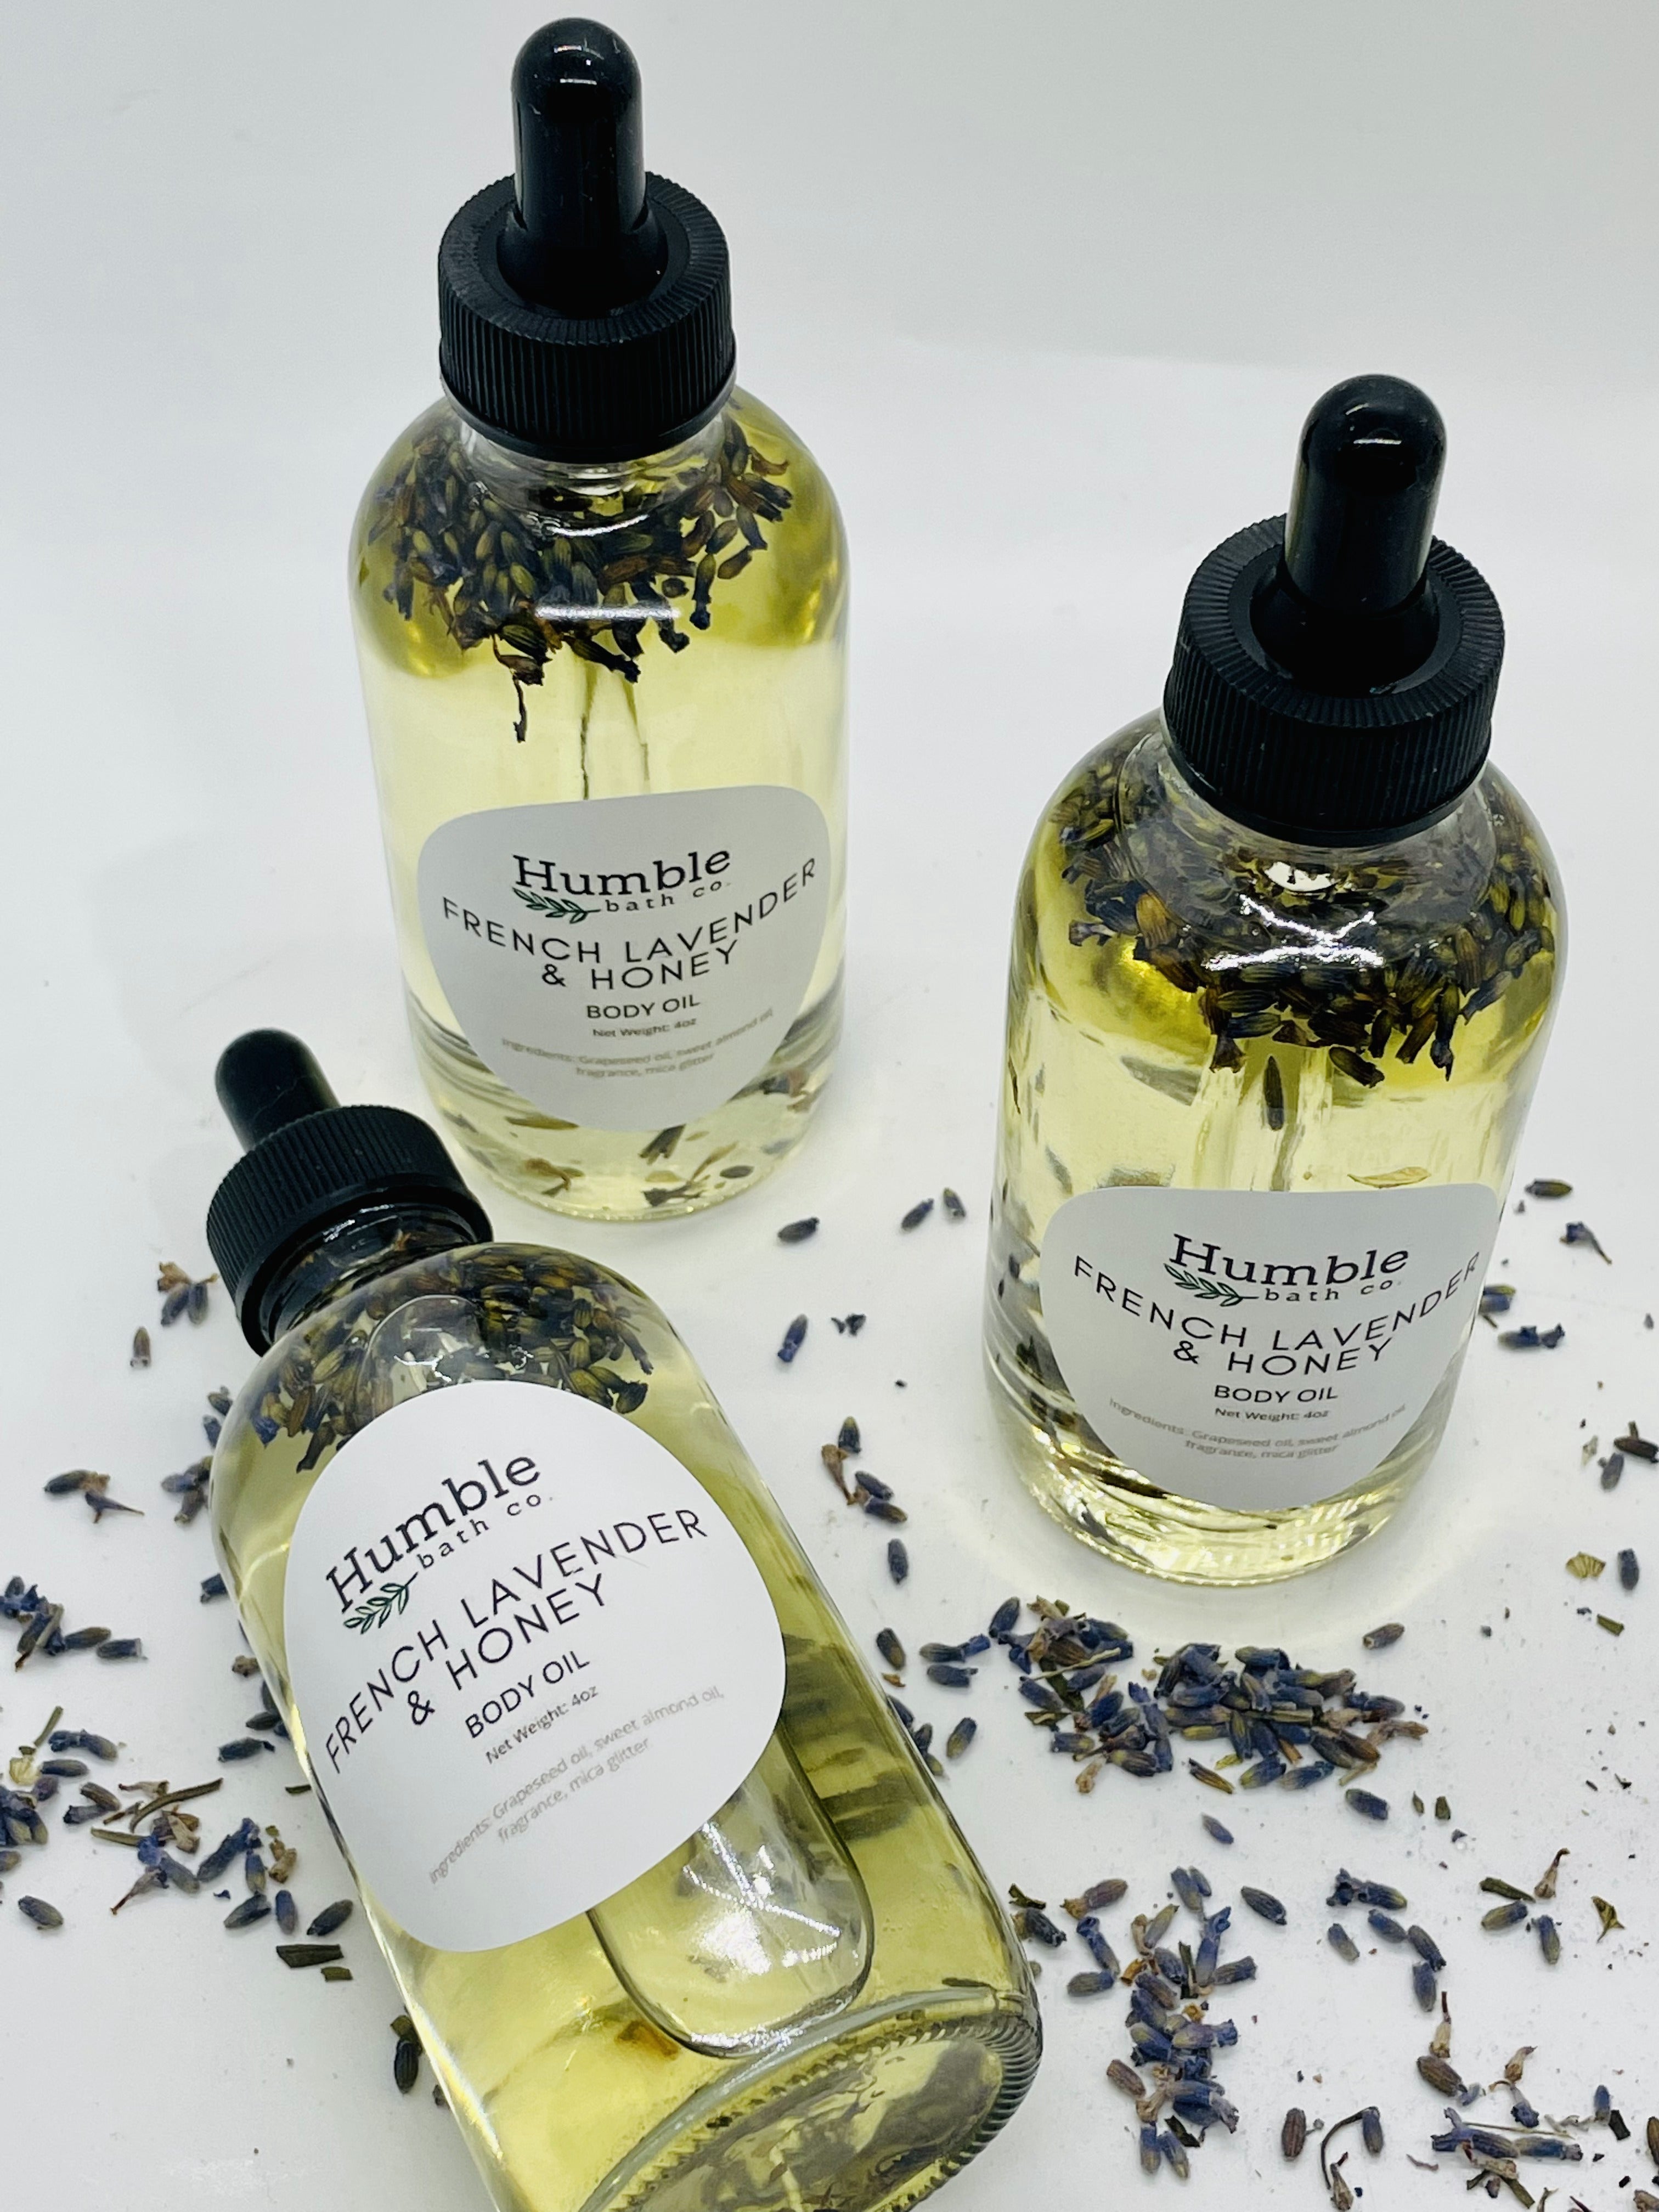 French Lavender & Honey Bath & Body Oil